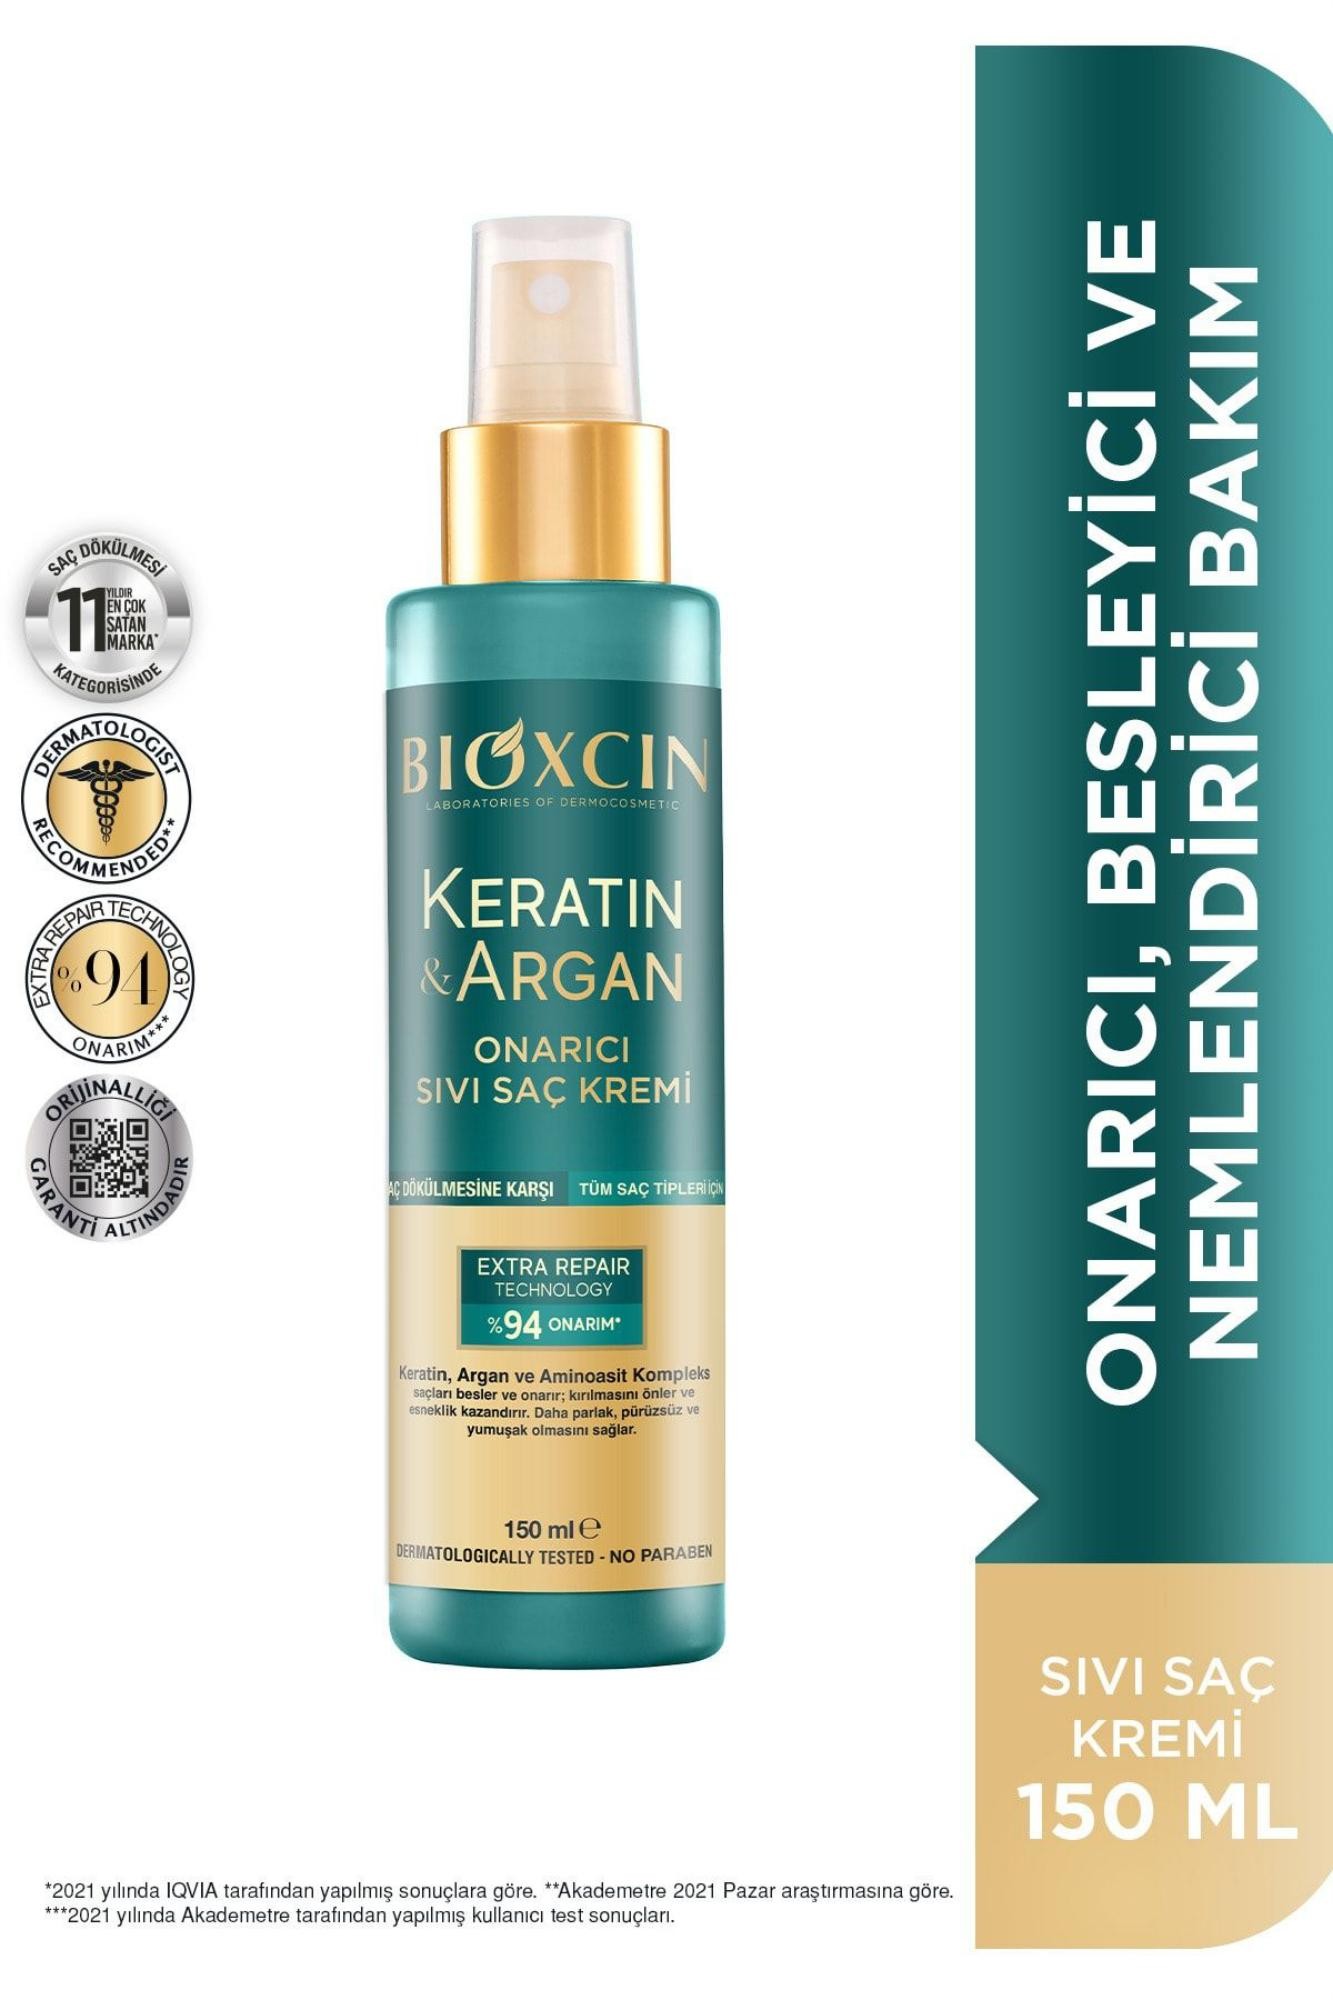 Bioxcin Keratin & Argan Repair Liquid Hair Care Cream 150 Ml for Damaged and Damaged Hair